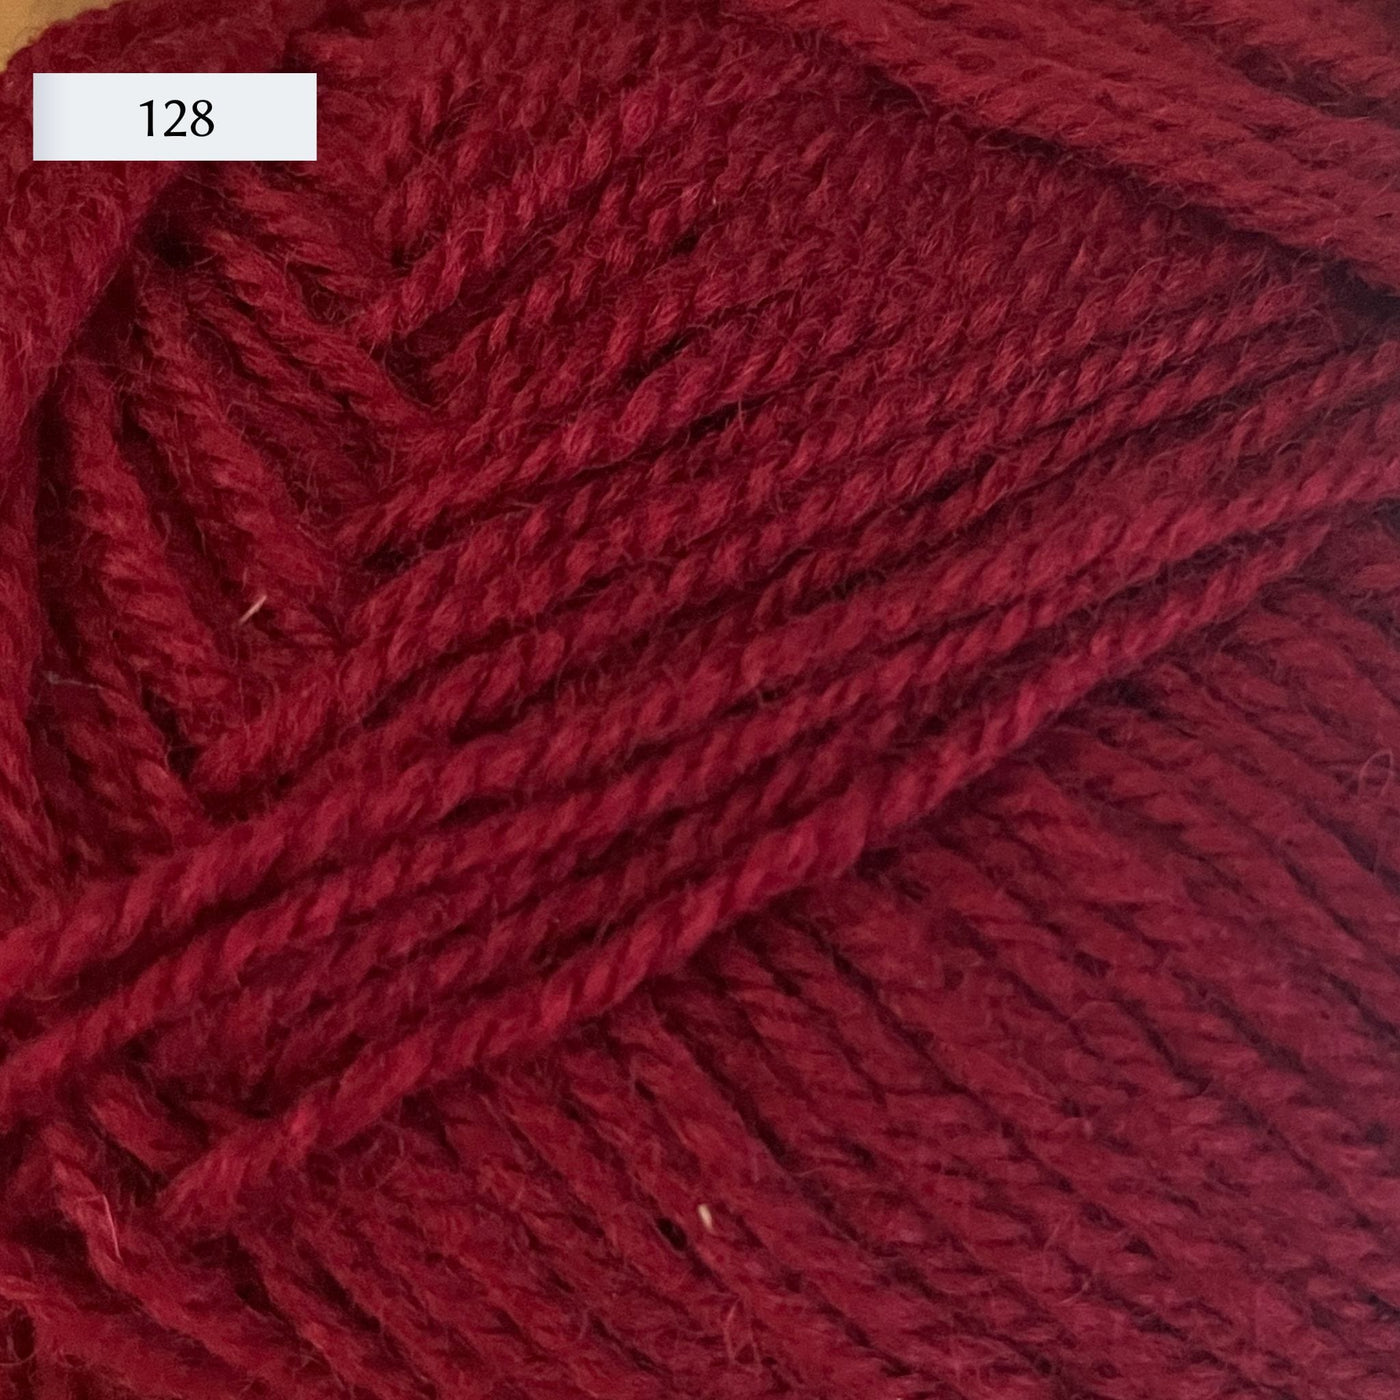 Rauma Strikkegarn, DK weight yarn, in color 128, deep raspberry red